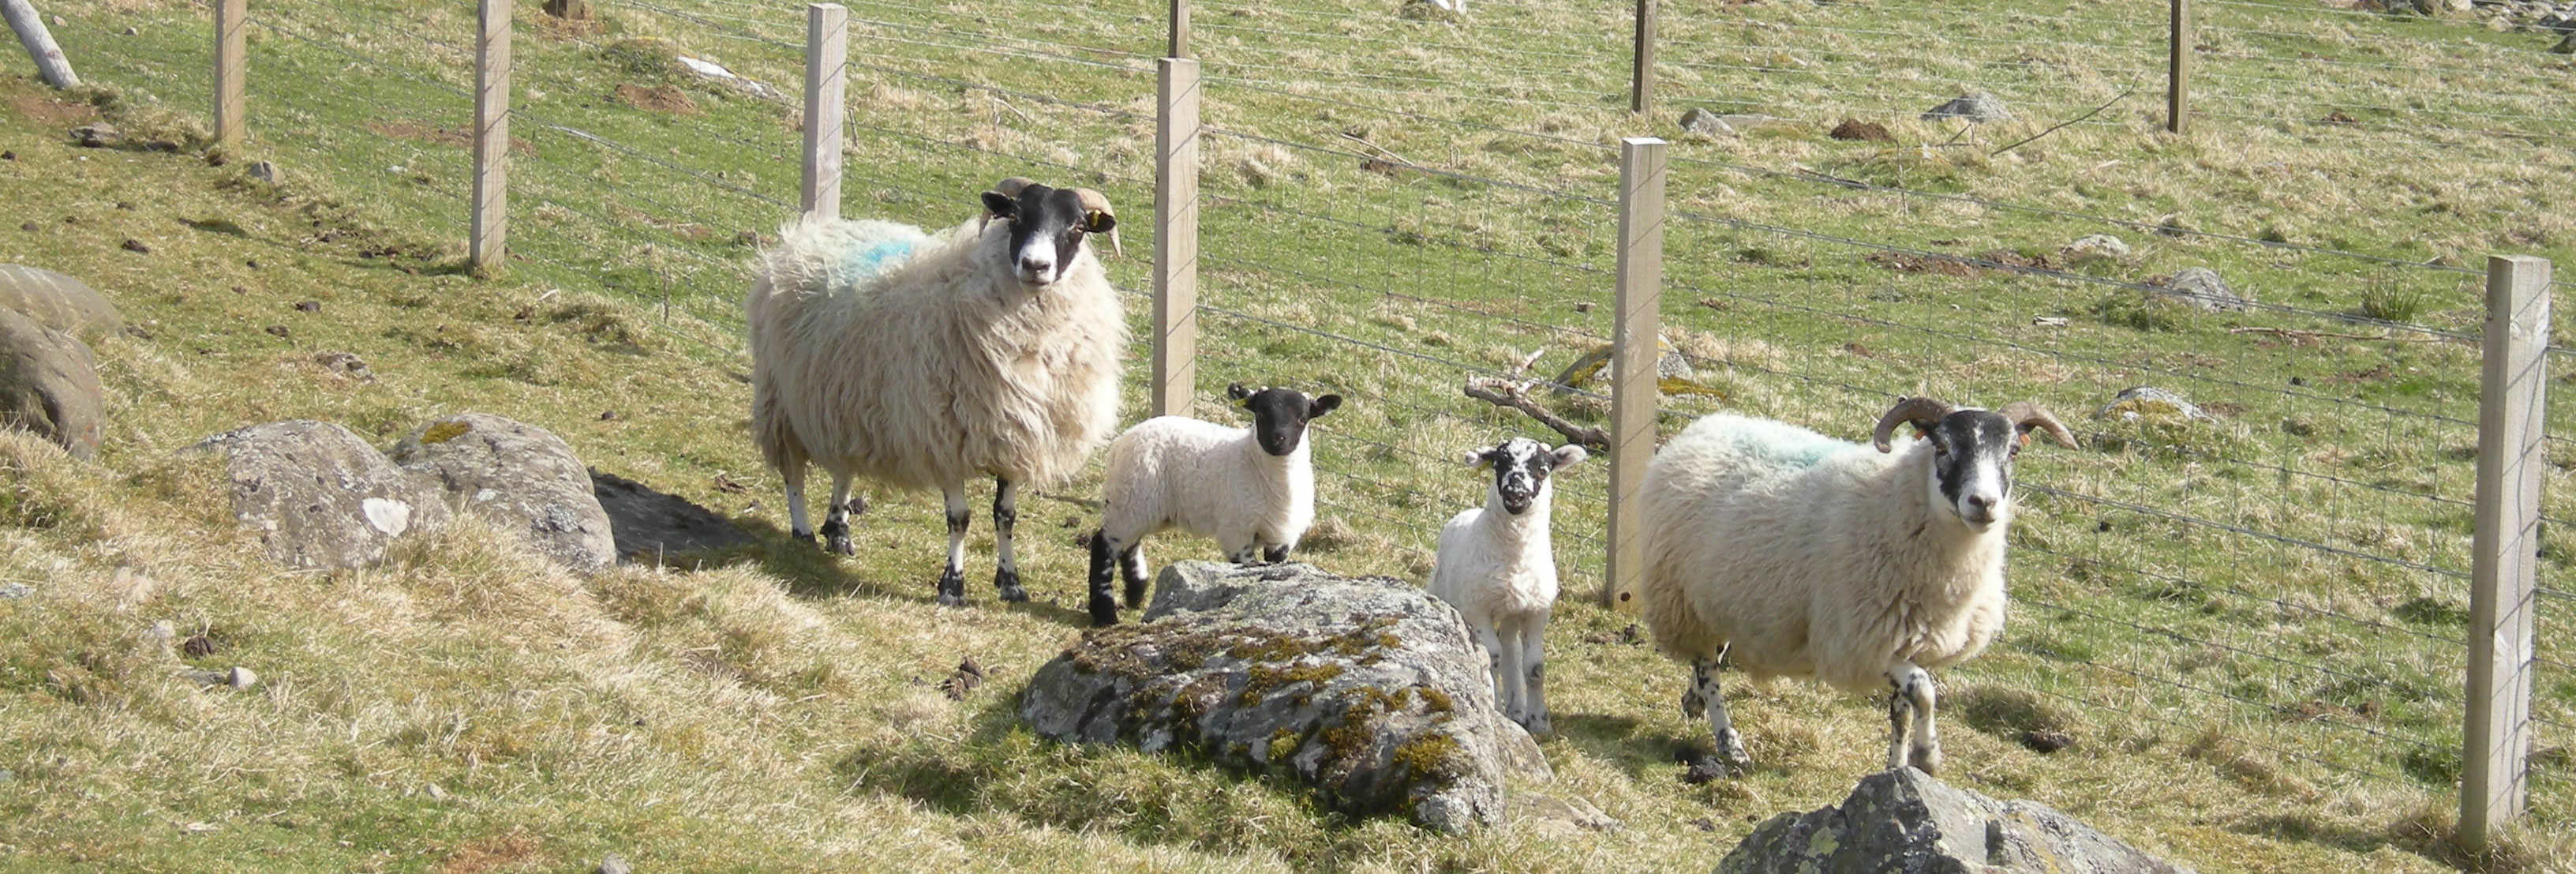 sheep near Prosen hostel in Angus South Cairngorms